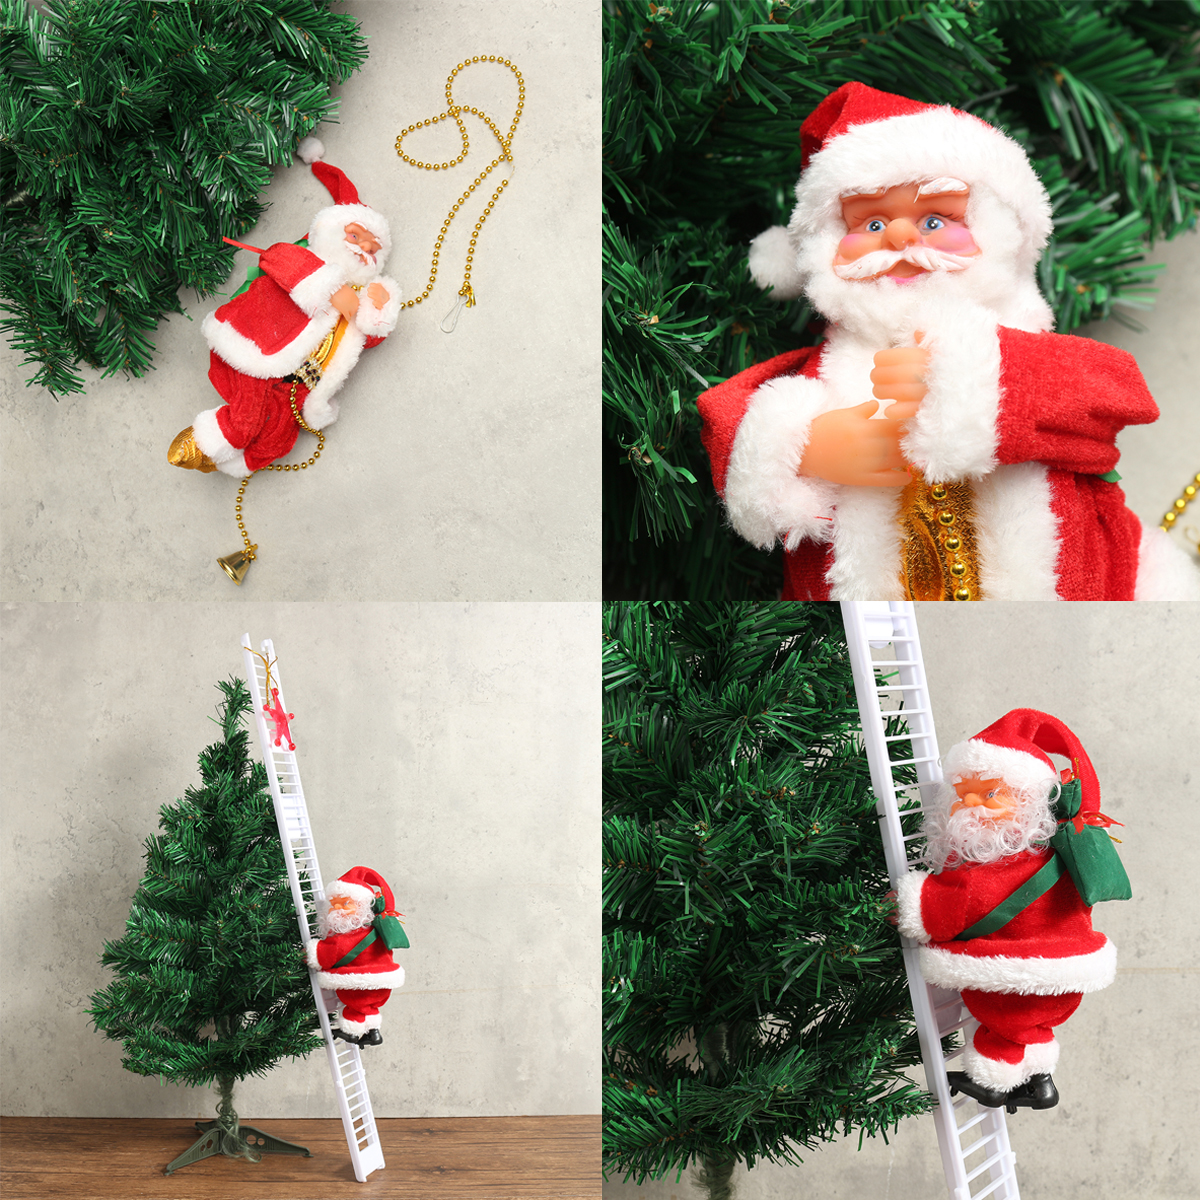 Christmas-Senta-Claus-Climbing-Ladder-Hanging-Decorations-Holiday-Gift-1333945-1